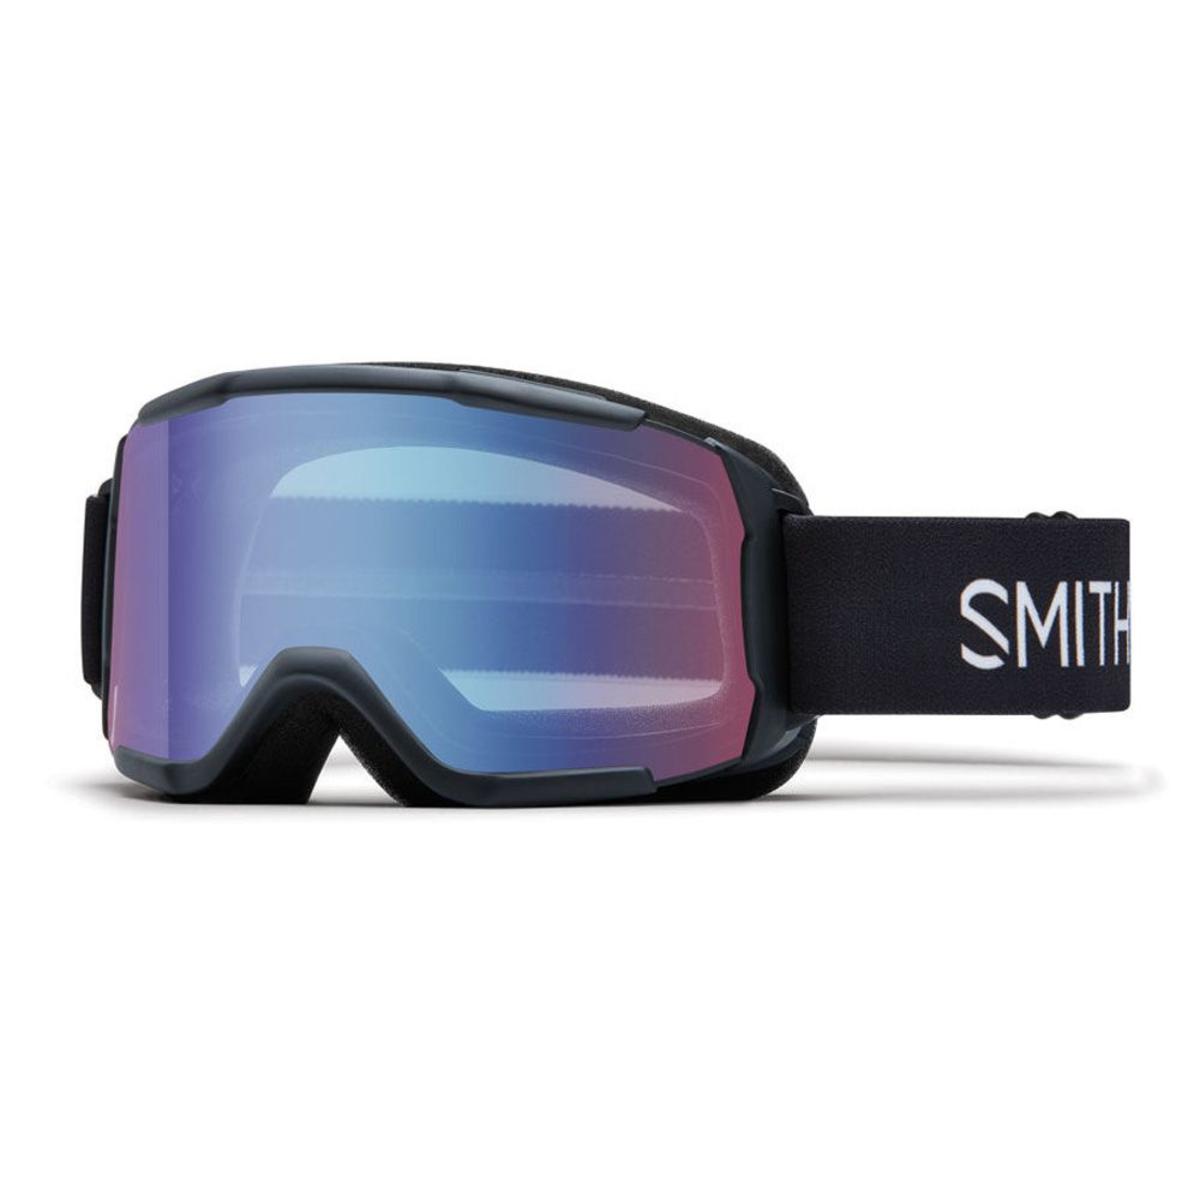 Smith Optics Daredevil Youth Goggles Blue Sensor Mirror - Black Frame